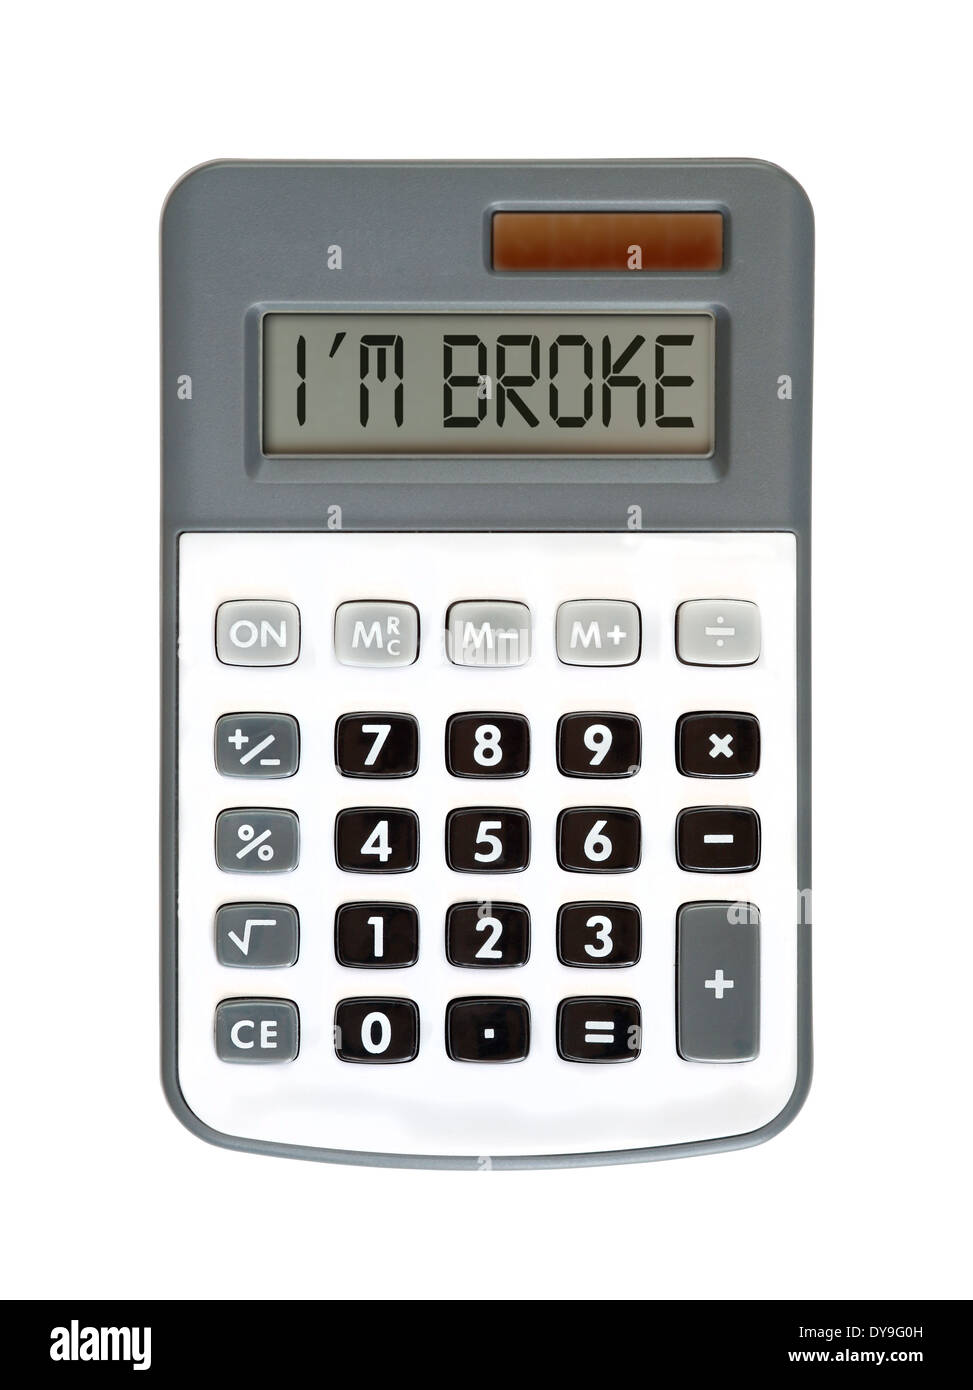 message on the display - money talks - I am broke Stock Photo